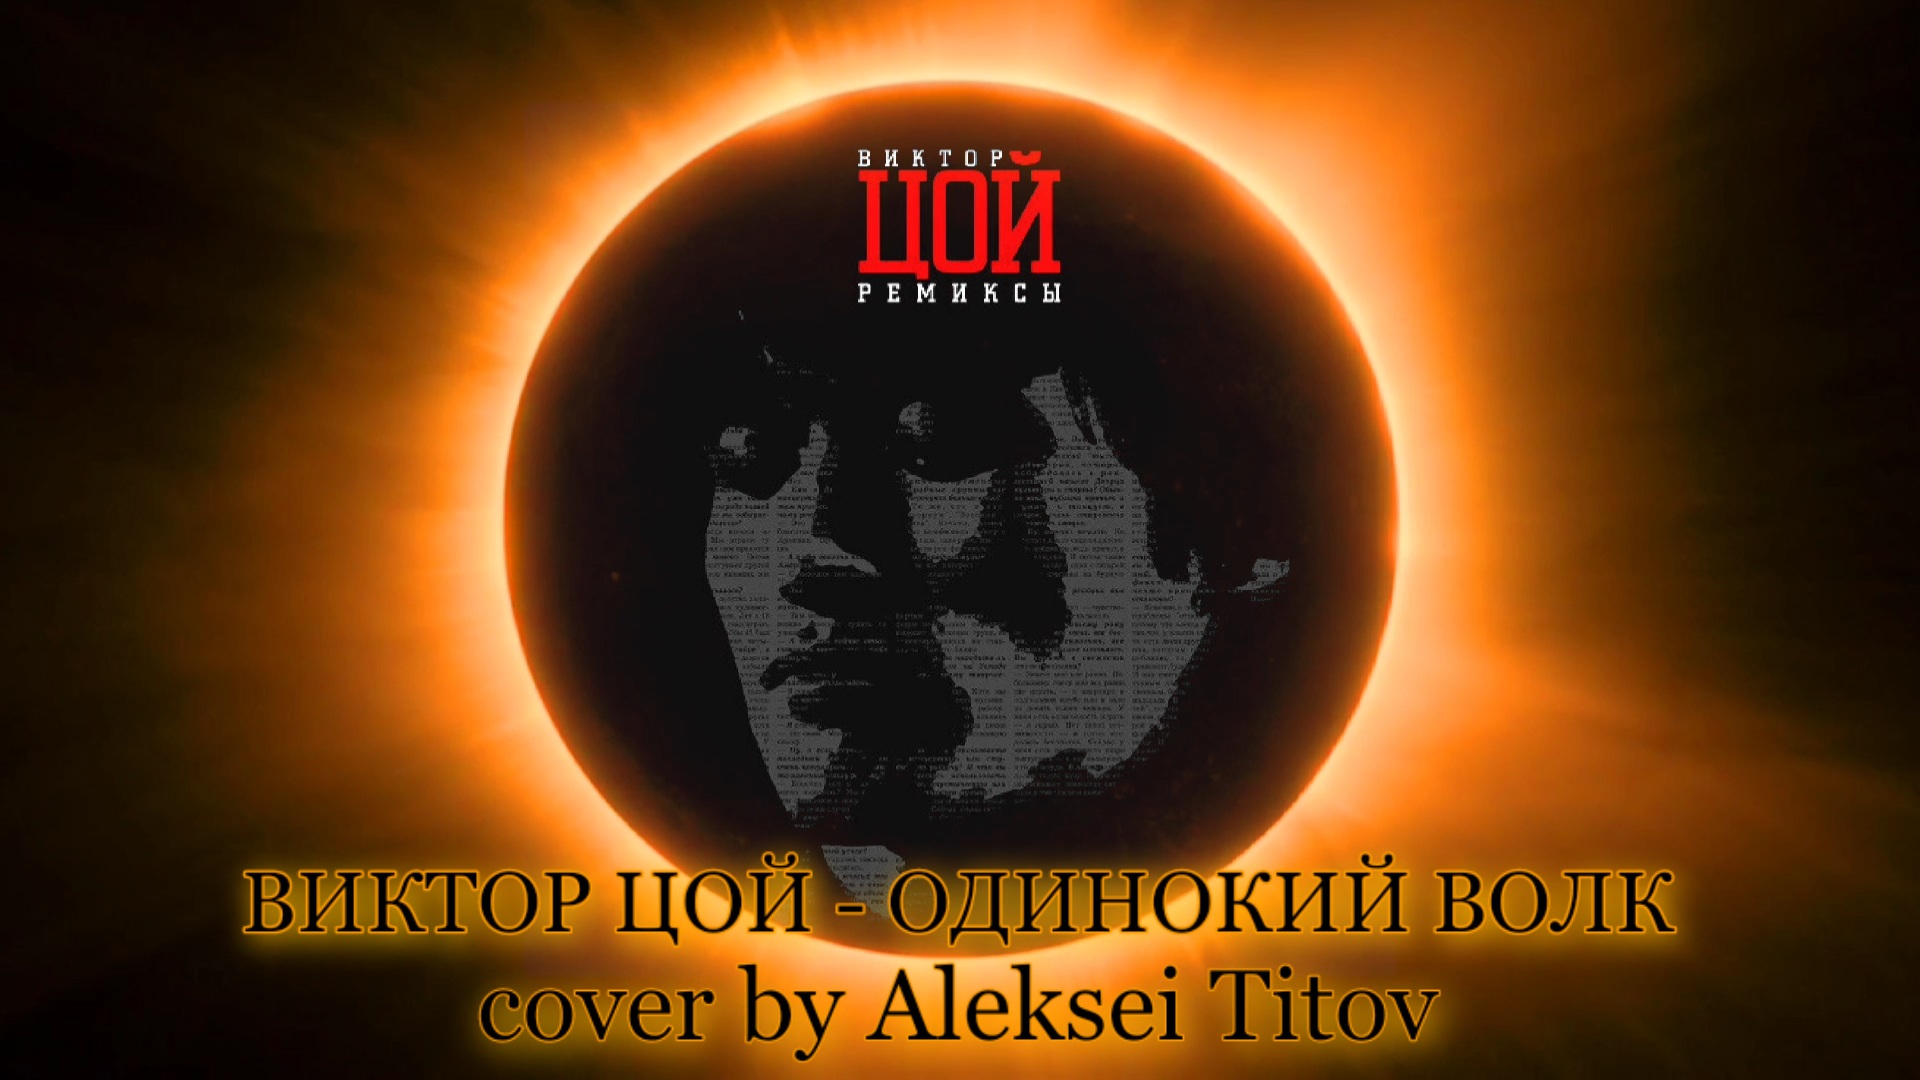 ВИКТОР ЦОЙ - ОДИНОКИЙ ВОЛК (cover by Aleksei Titov)